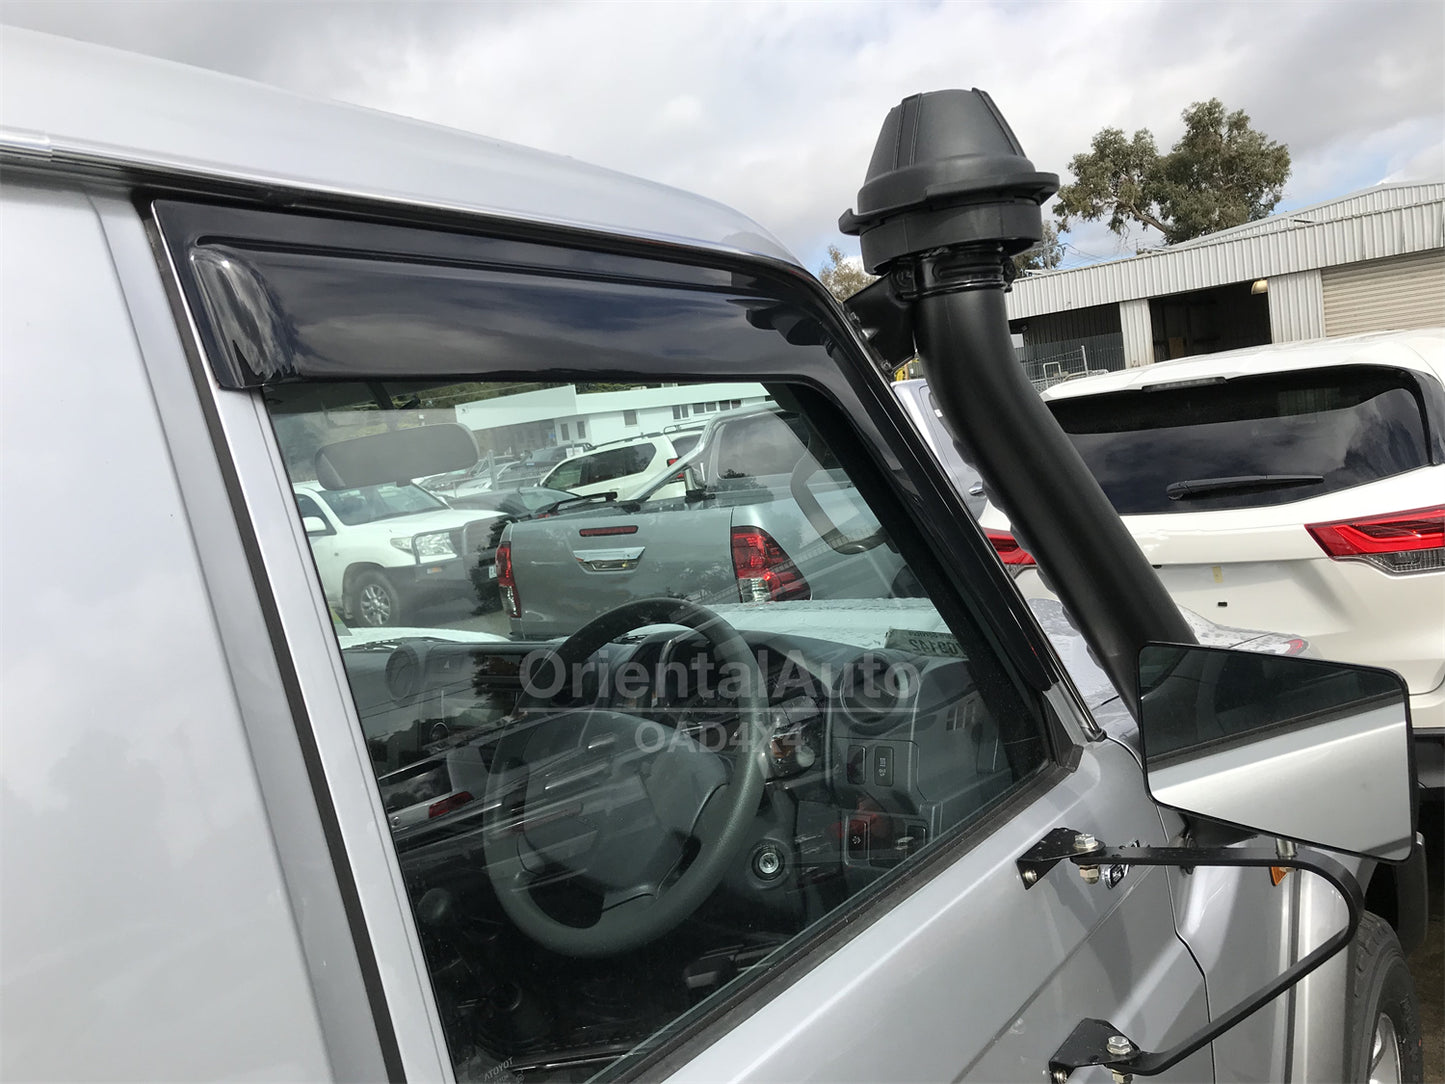 OAD Luxury 2pcs Weather Shields Weathershields Window Visor for Toyota Land Cruiser LandCruiser 70 76 78 79 LC70 LC76 LC78 LC79 2007+